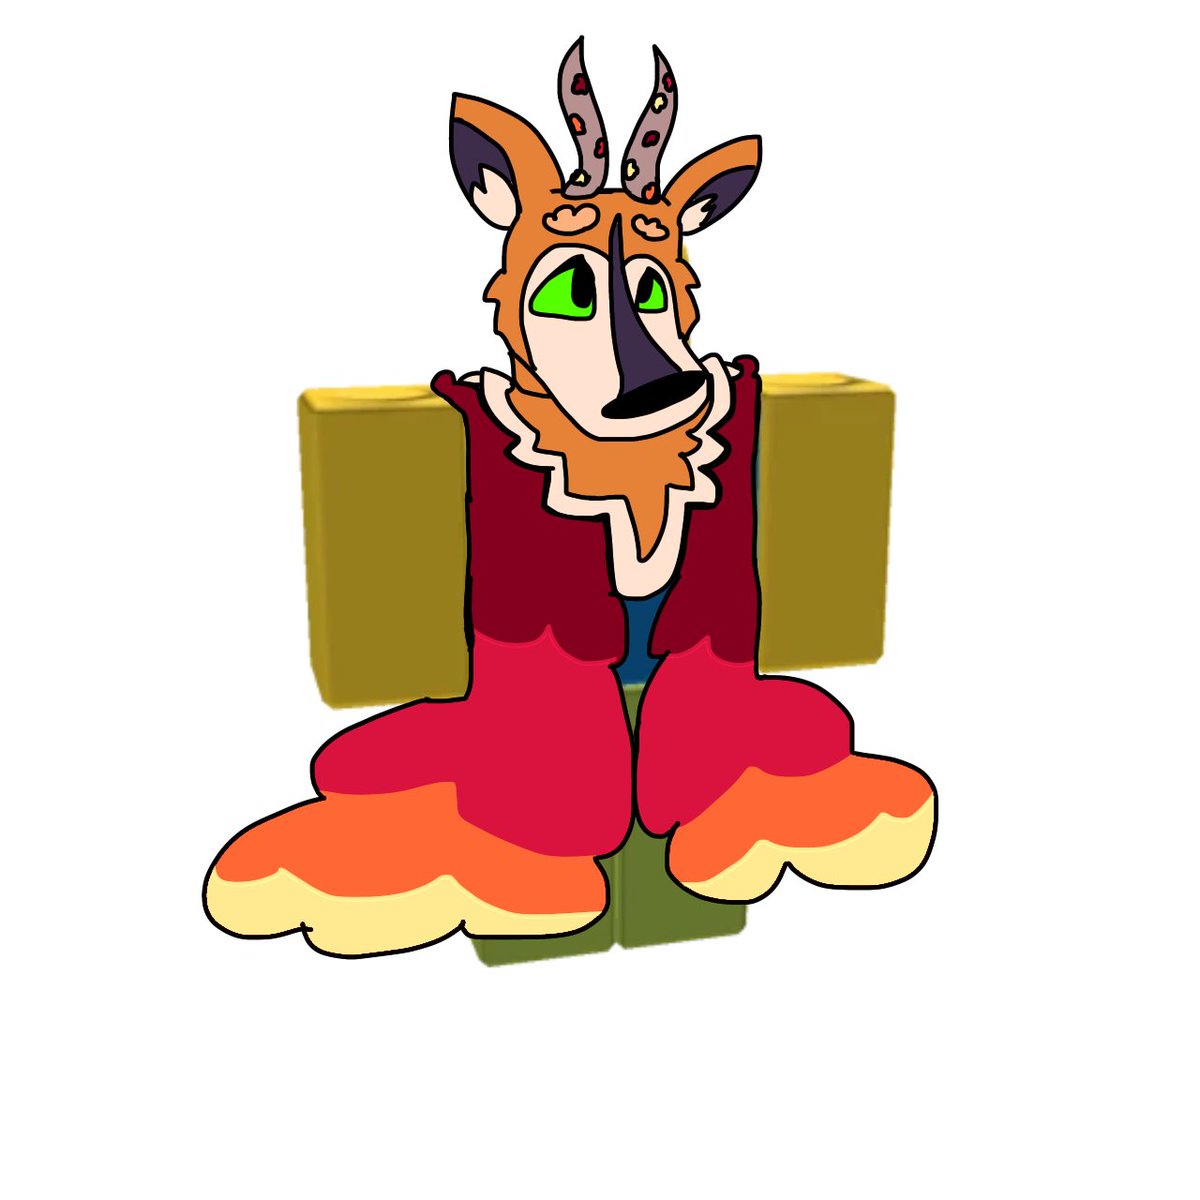 Guys what if… gazelle Roblox set

Name ideas:
-Rosy Gazelle Fluff
-Rosy Gazelle Dress
-Rosy Gazelle Head
#themaskedsinger #gazellemask